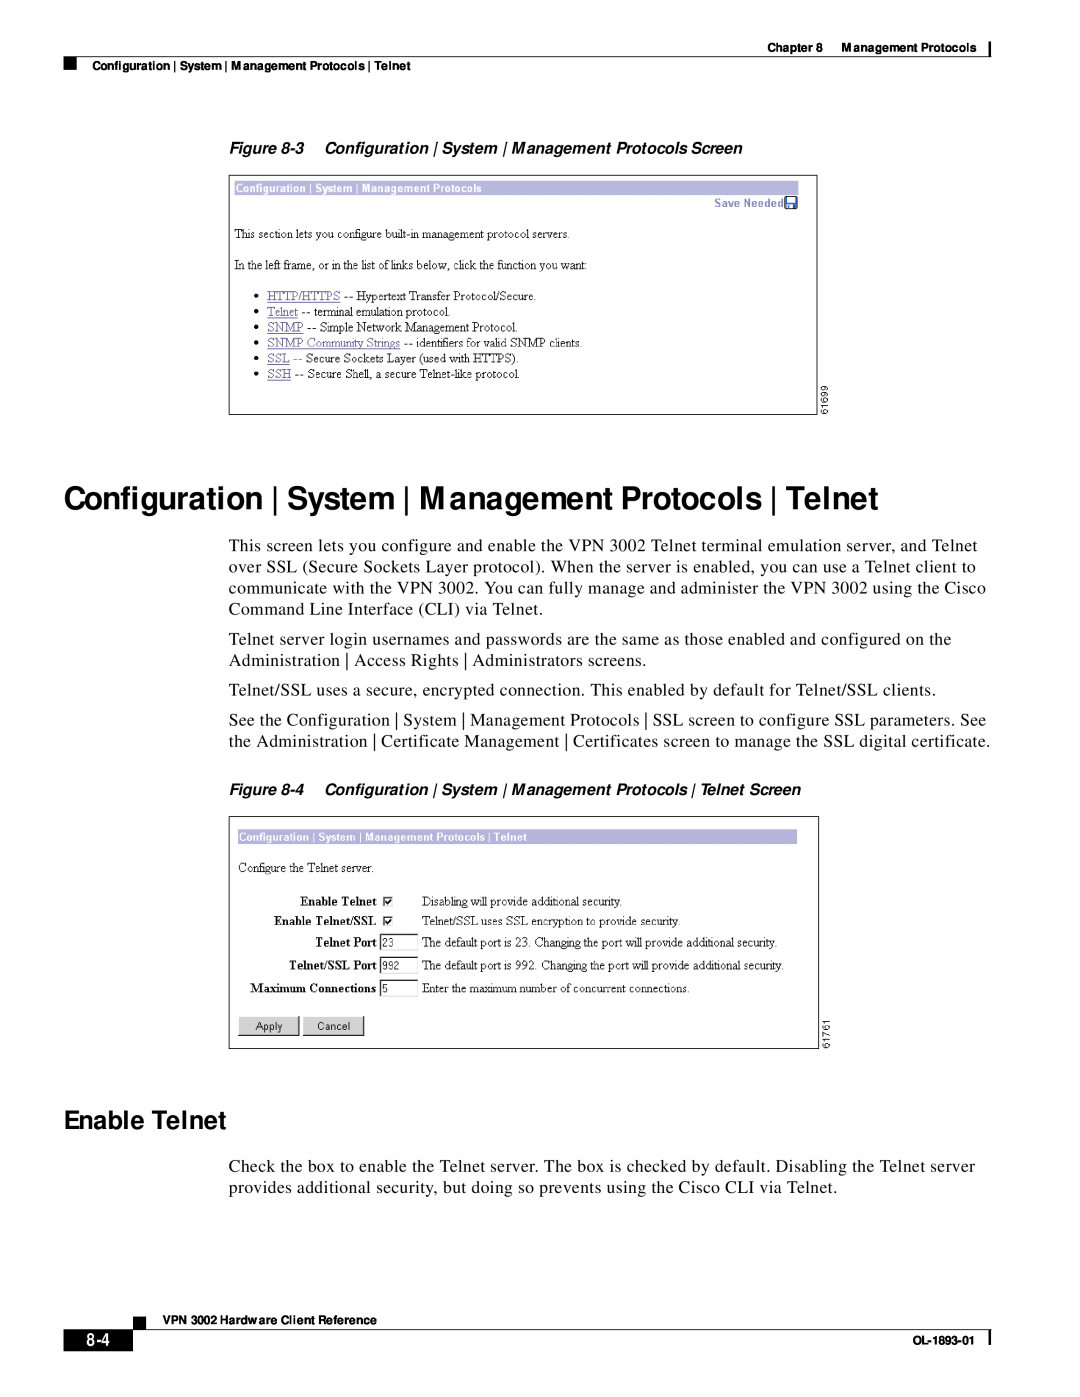 Cisco Systems manual Enable Telnet, Management Protocols, VPN 3002 Hardware Client Reference 